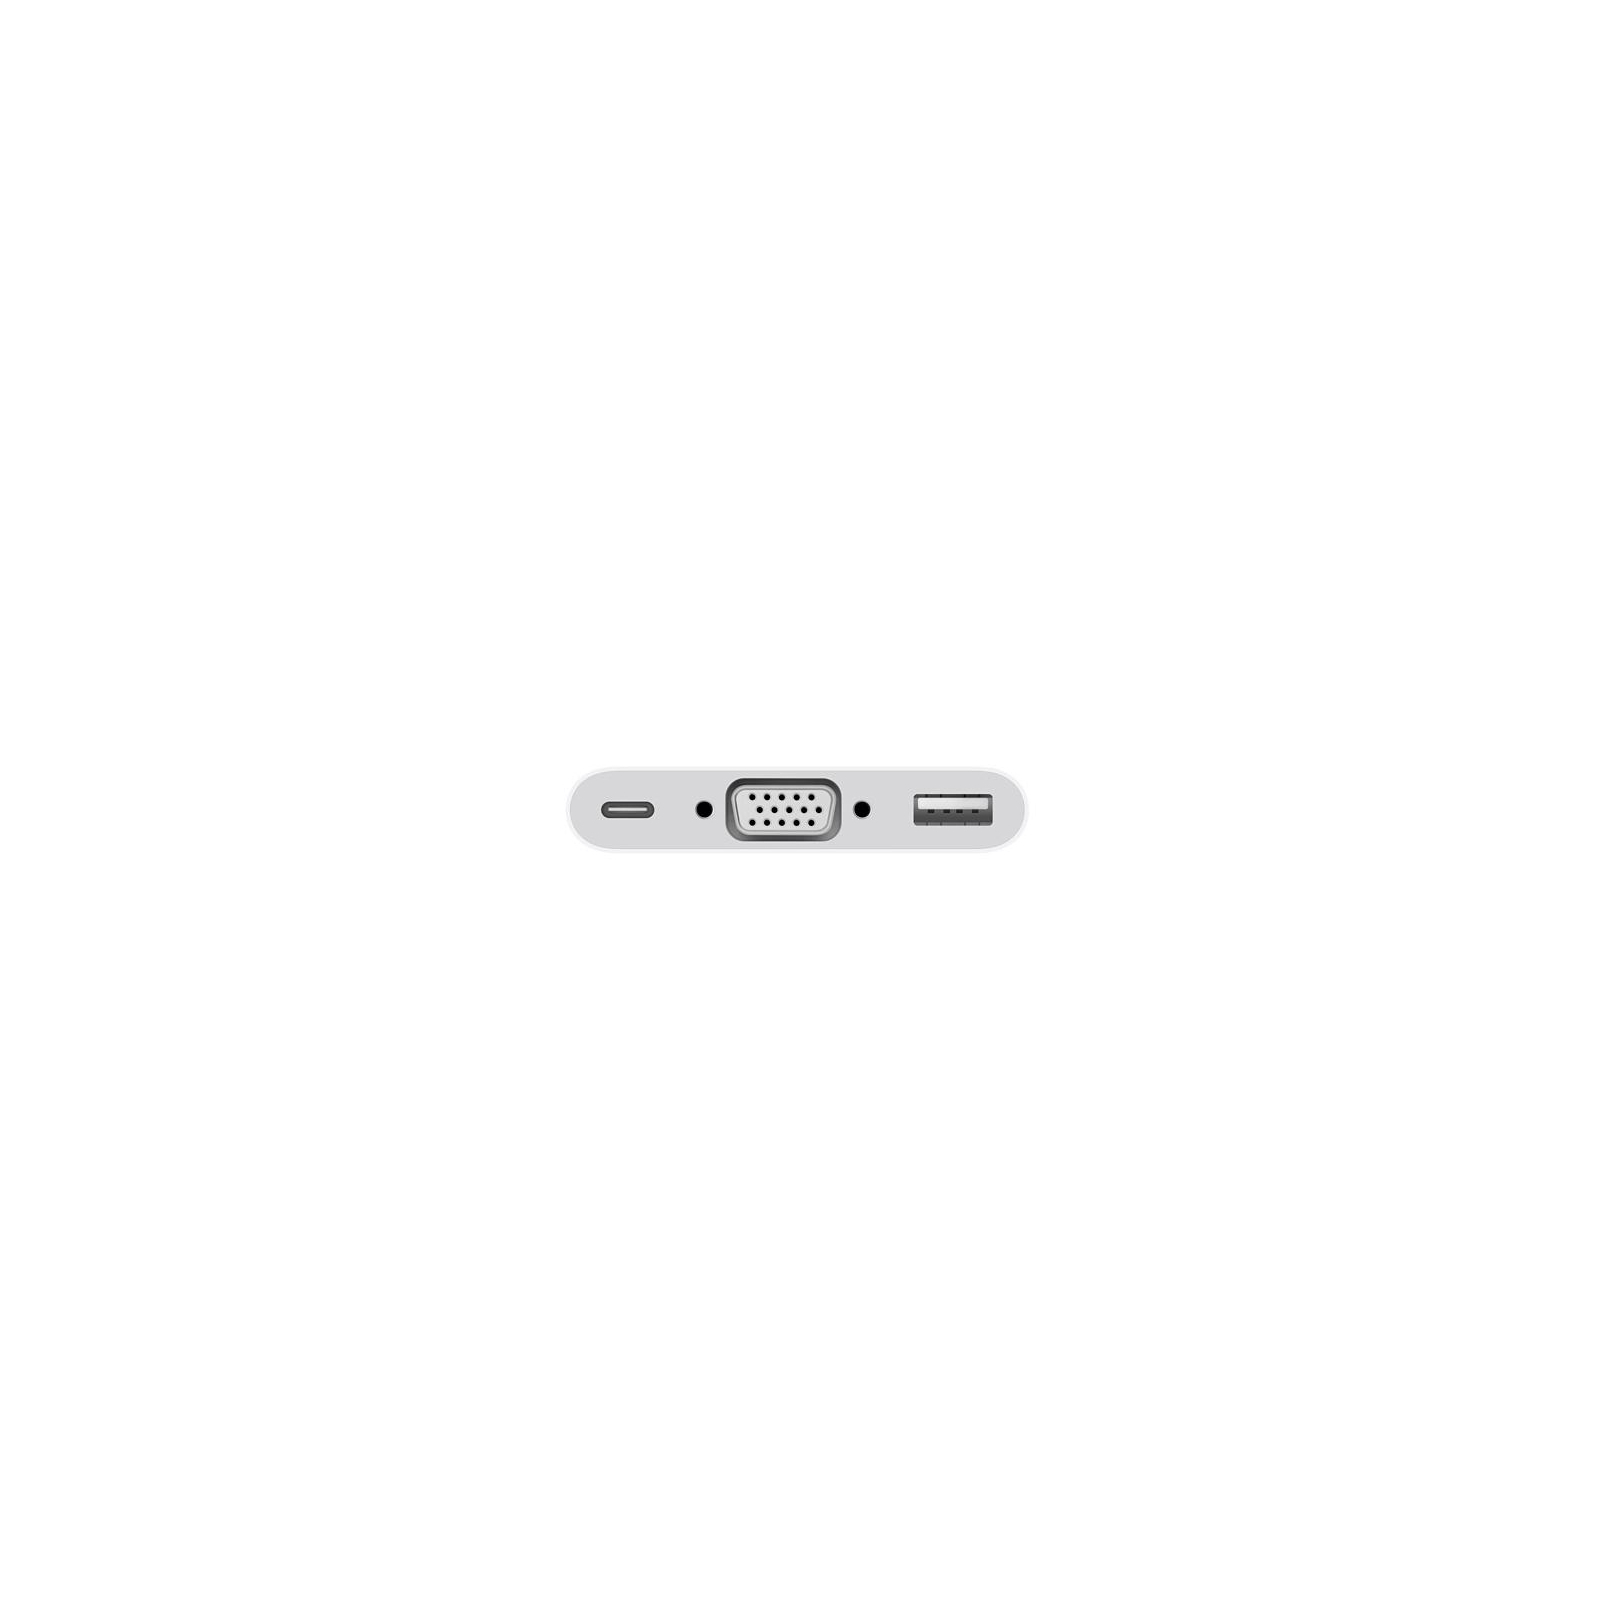 Порт-репликатор Apple USB-C to VGA Multiport Adapter (MJ1L2ZM/A) изображение 3